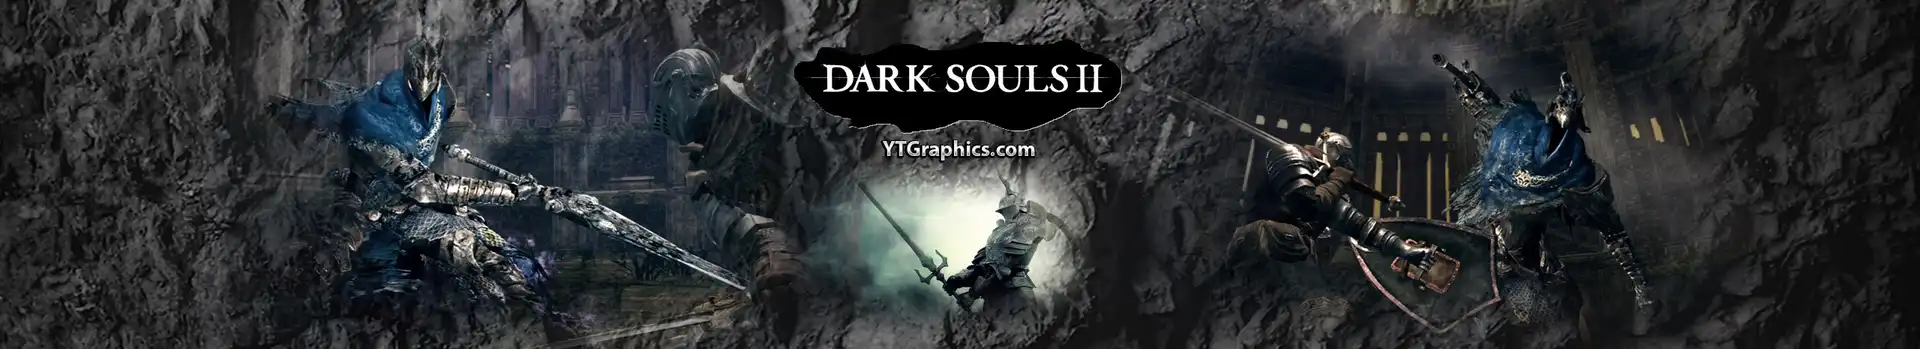 Dark Souls II preview